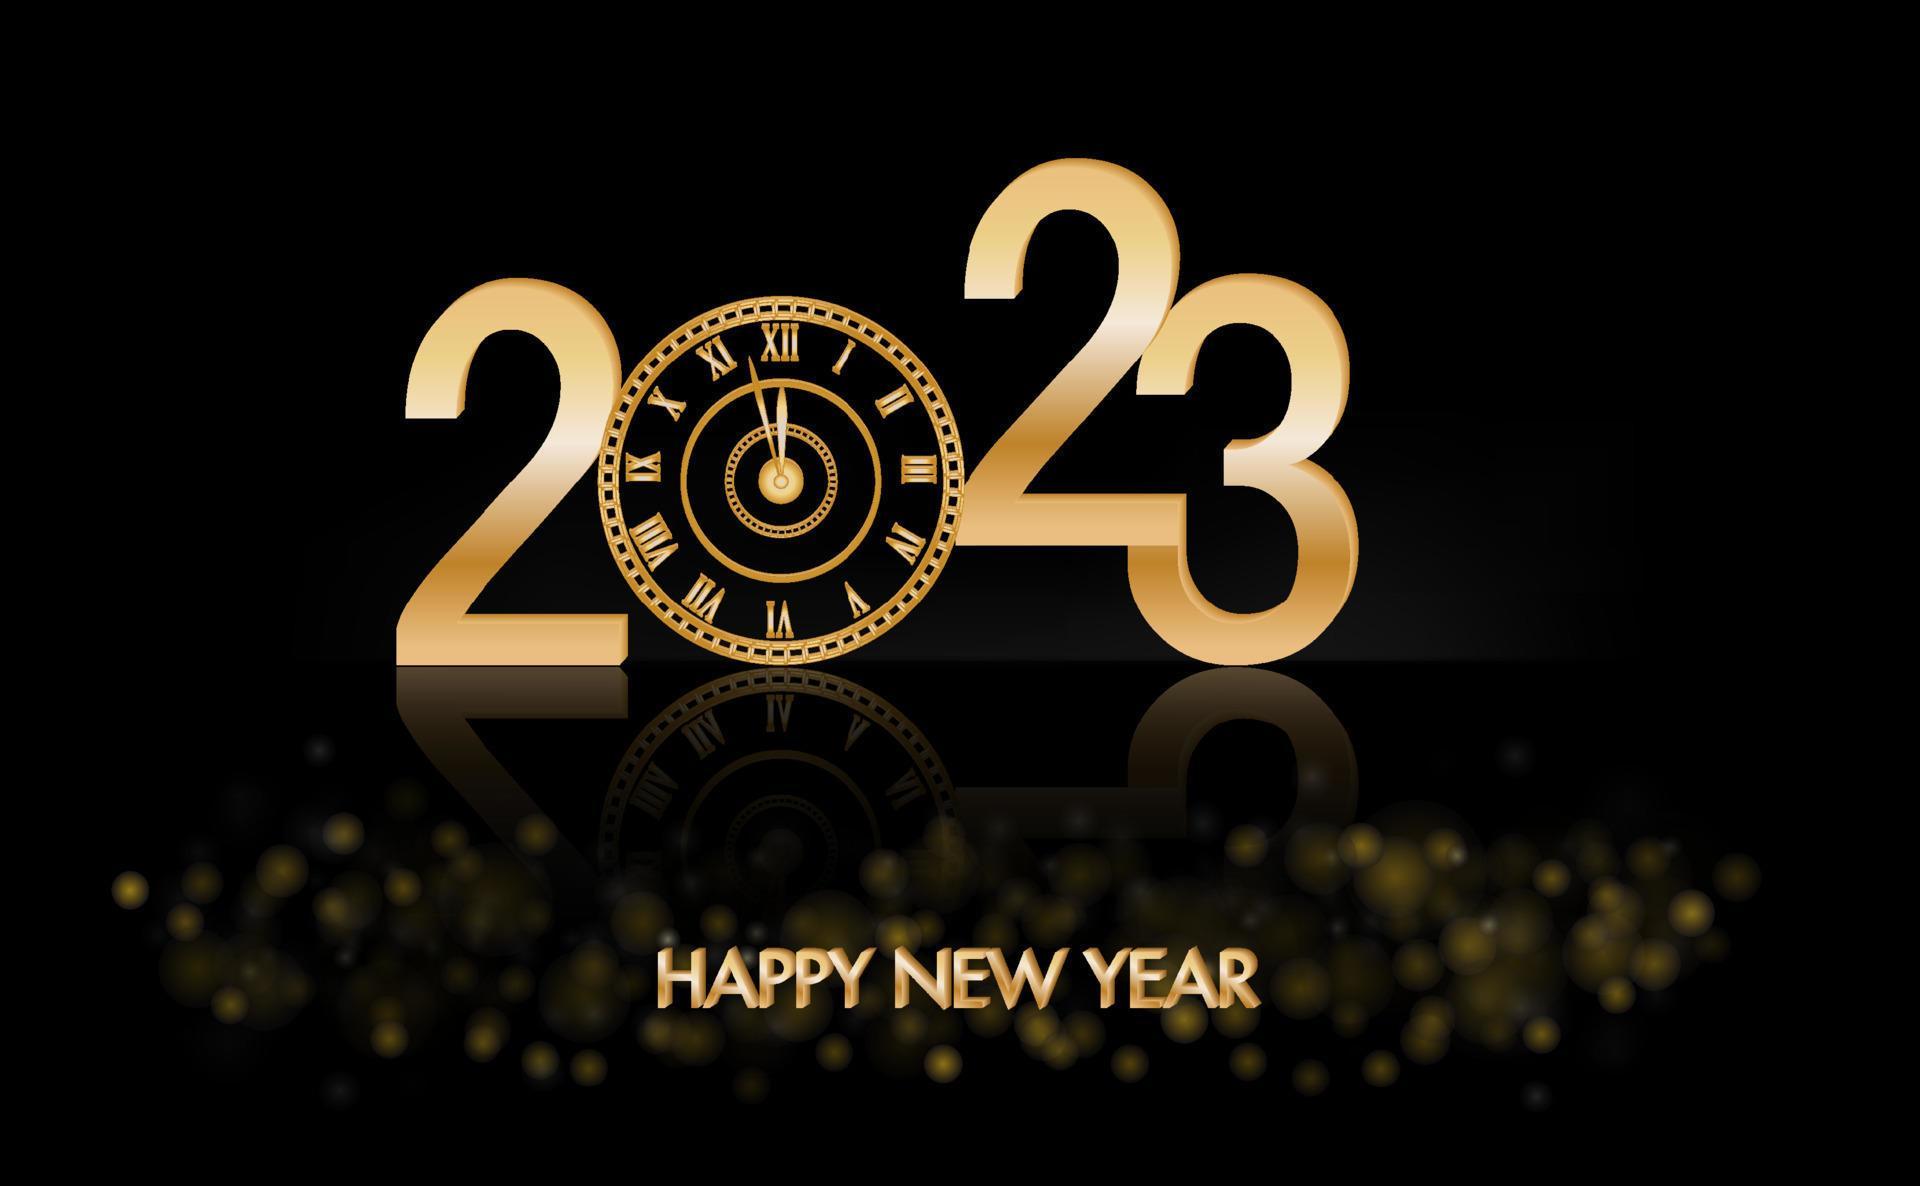 Happy New Year Image 2023 HD Wallpaper Naye Saal Kiimages Pics